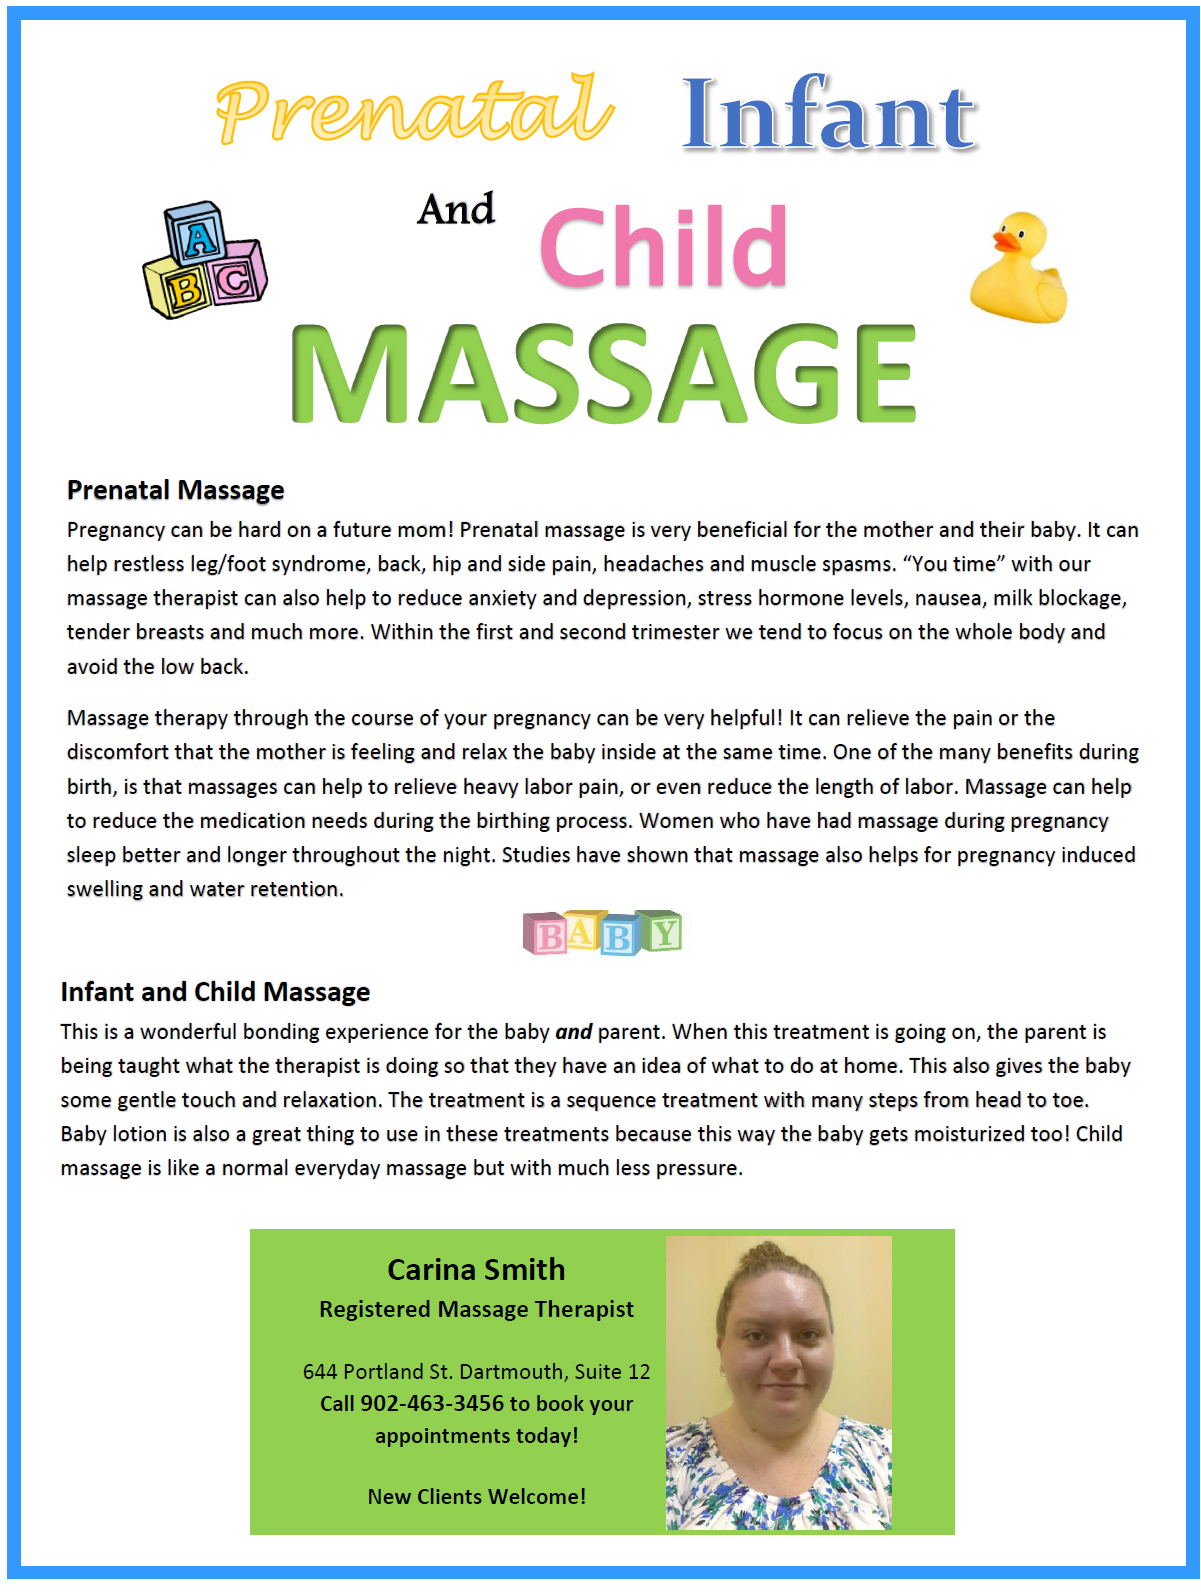 Prenatal, Infant & Child Massage